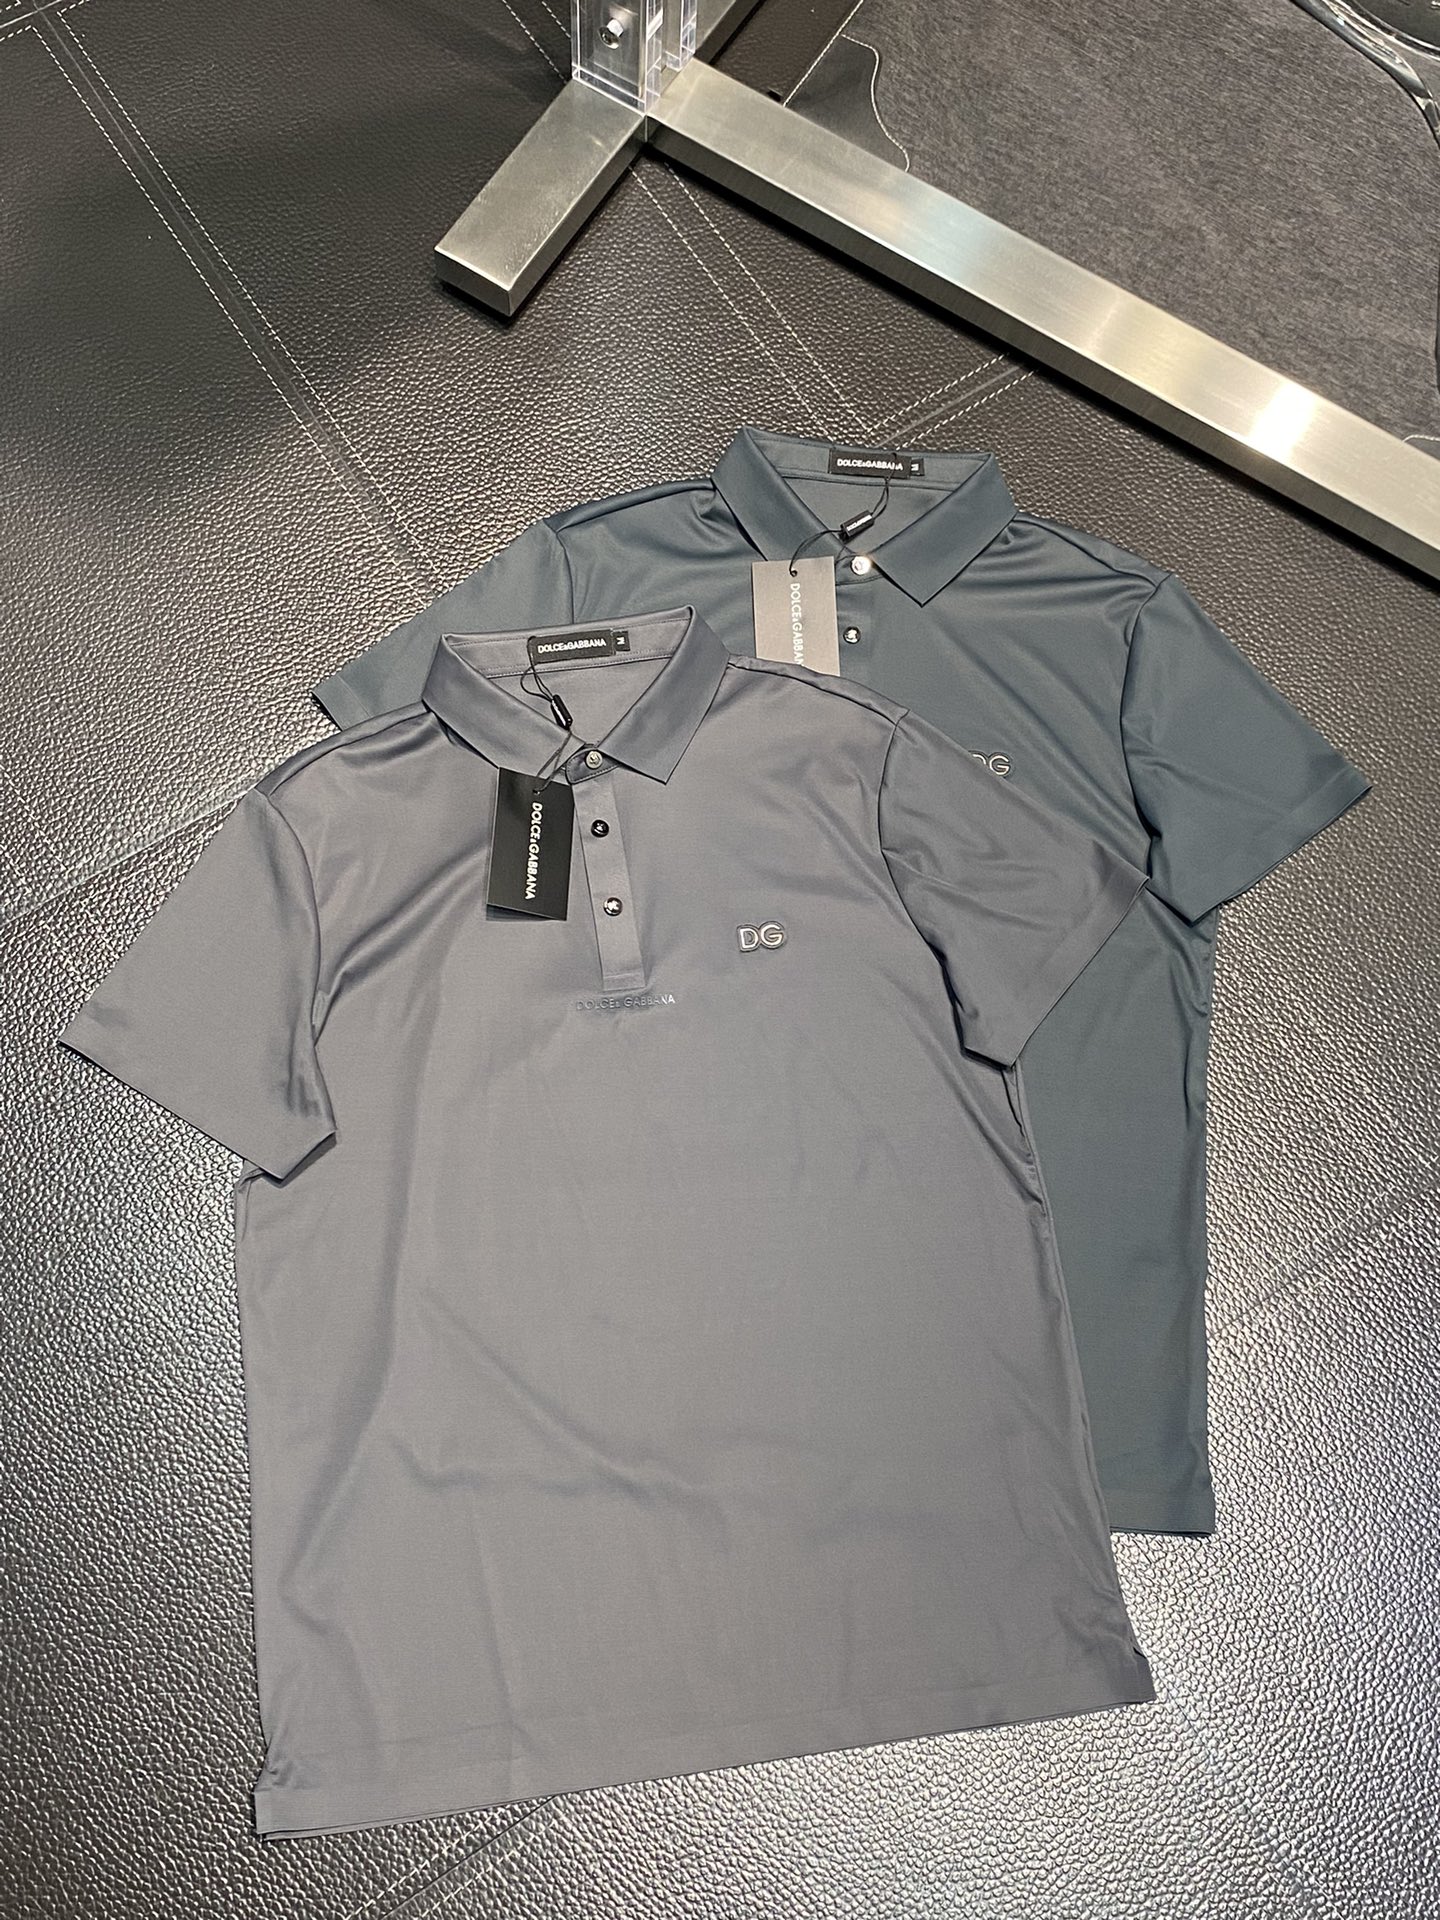 Dolce & Gabbana Clothing Polo T-Shirt Men Fashion Short Sleeve